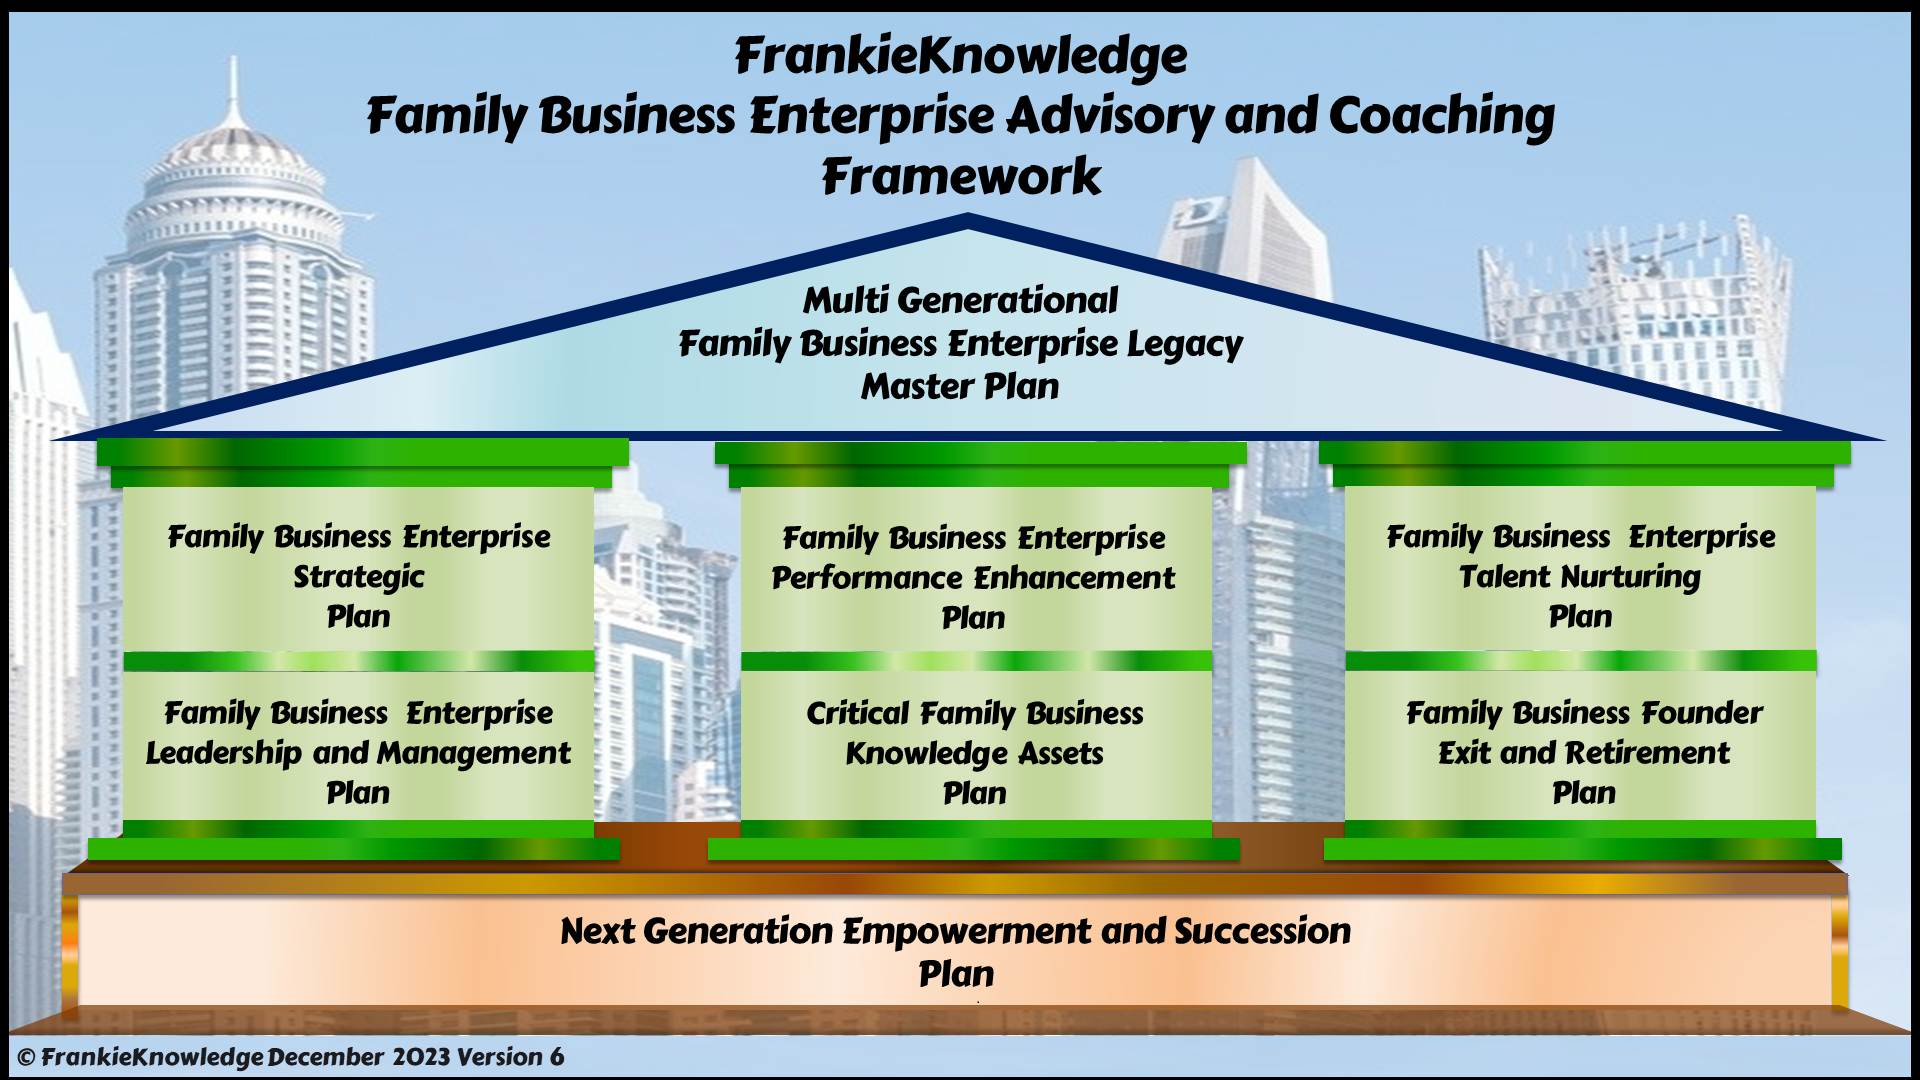 FrankieKnowledge Family Business Enterprise Advisory and Coaching Framework